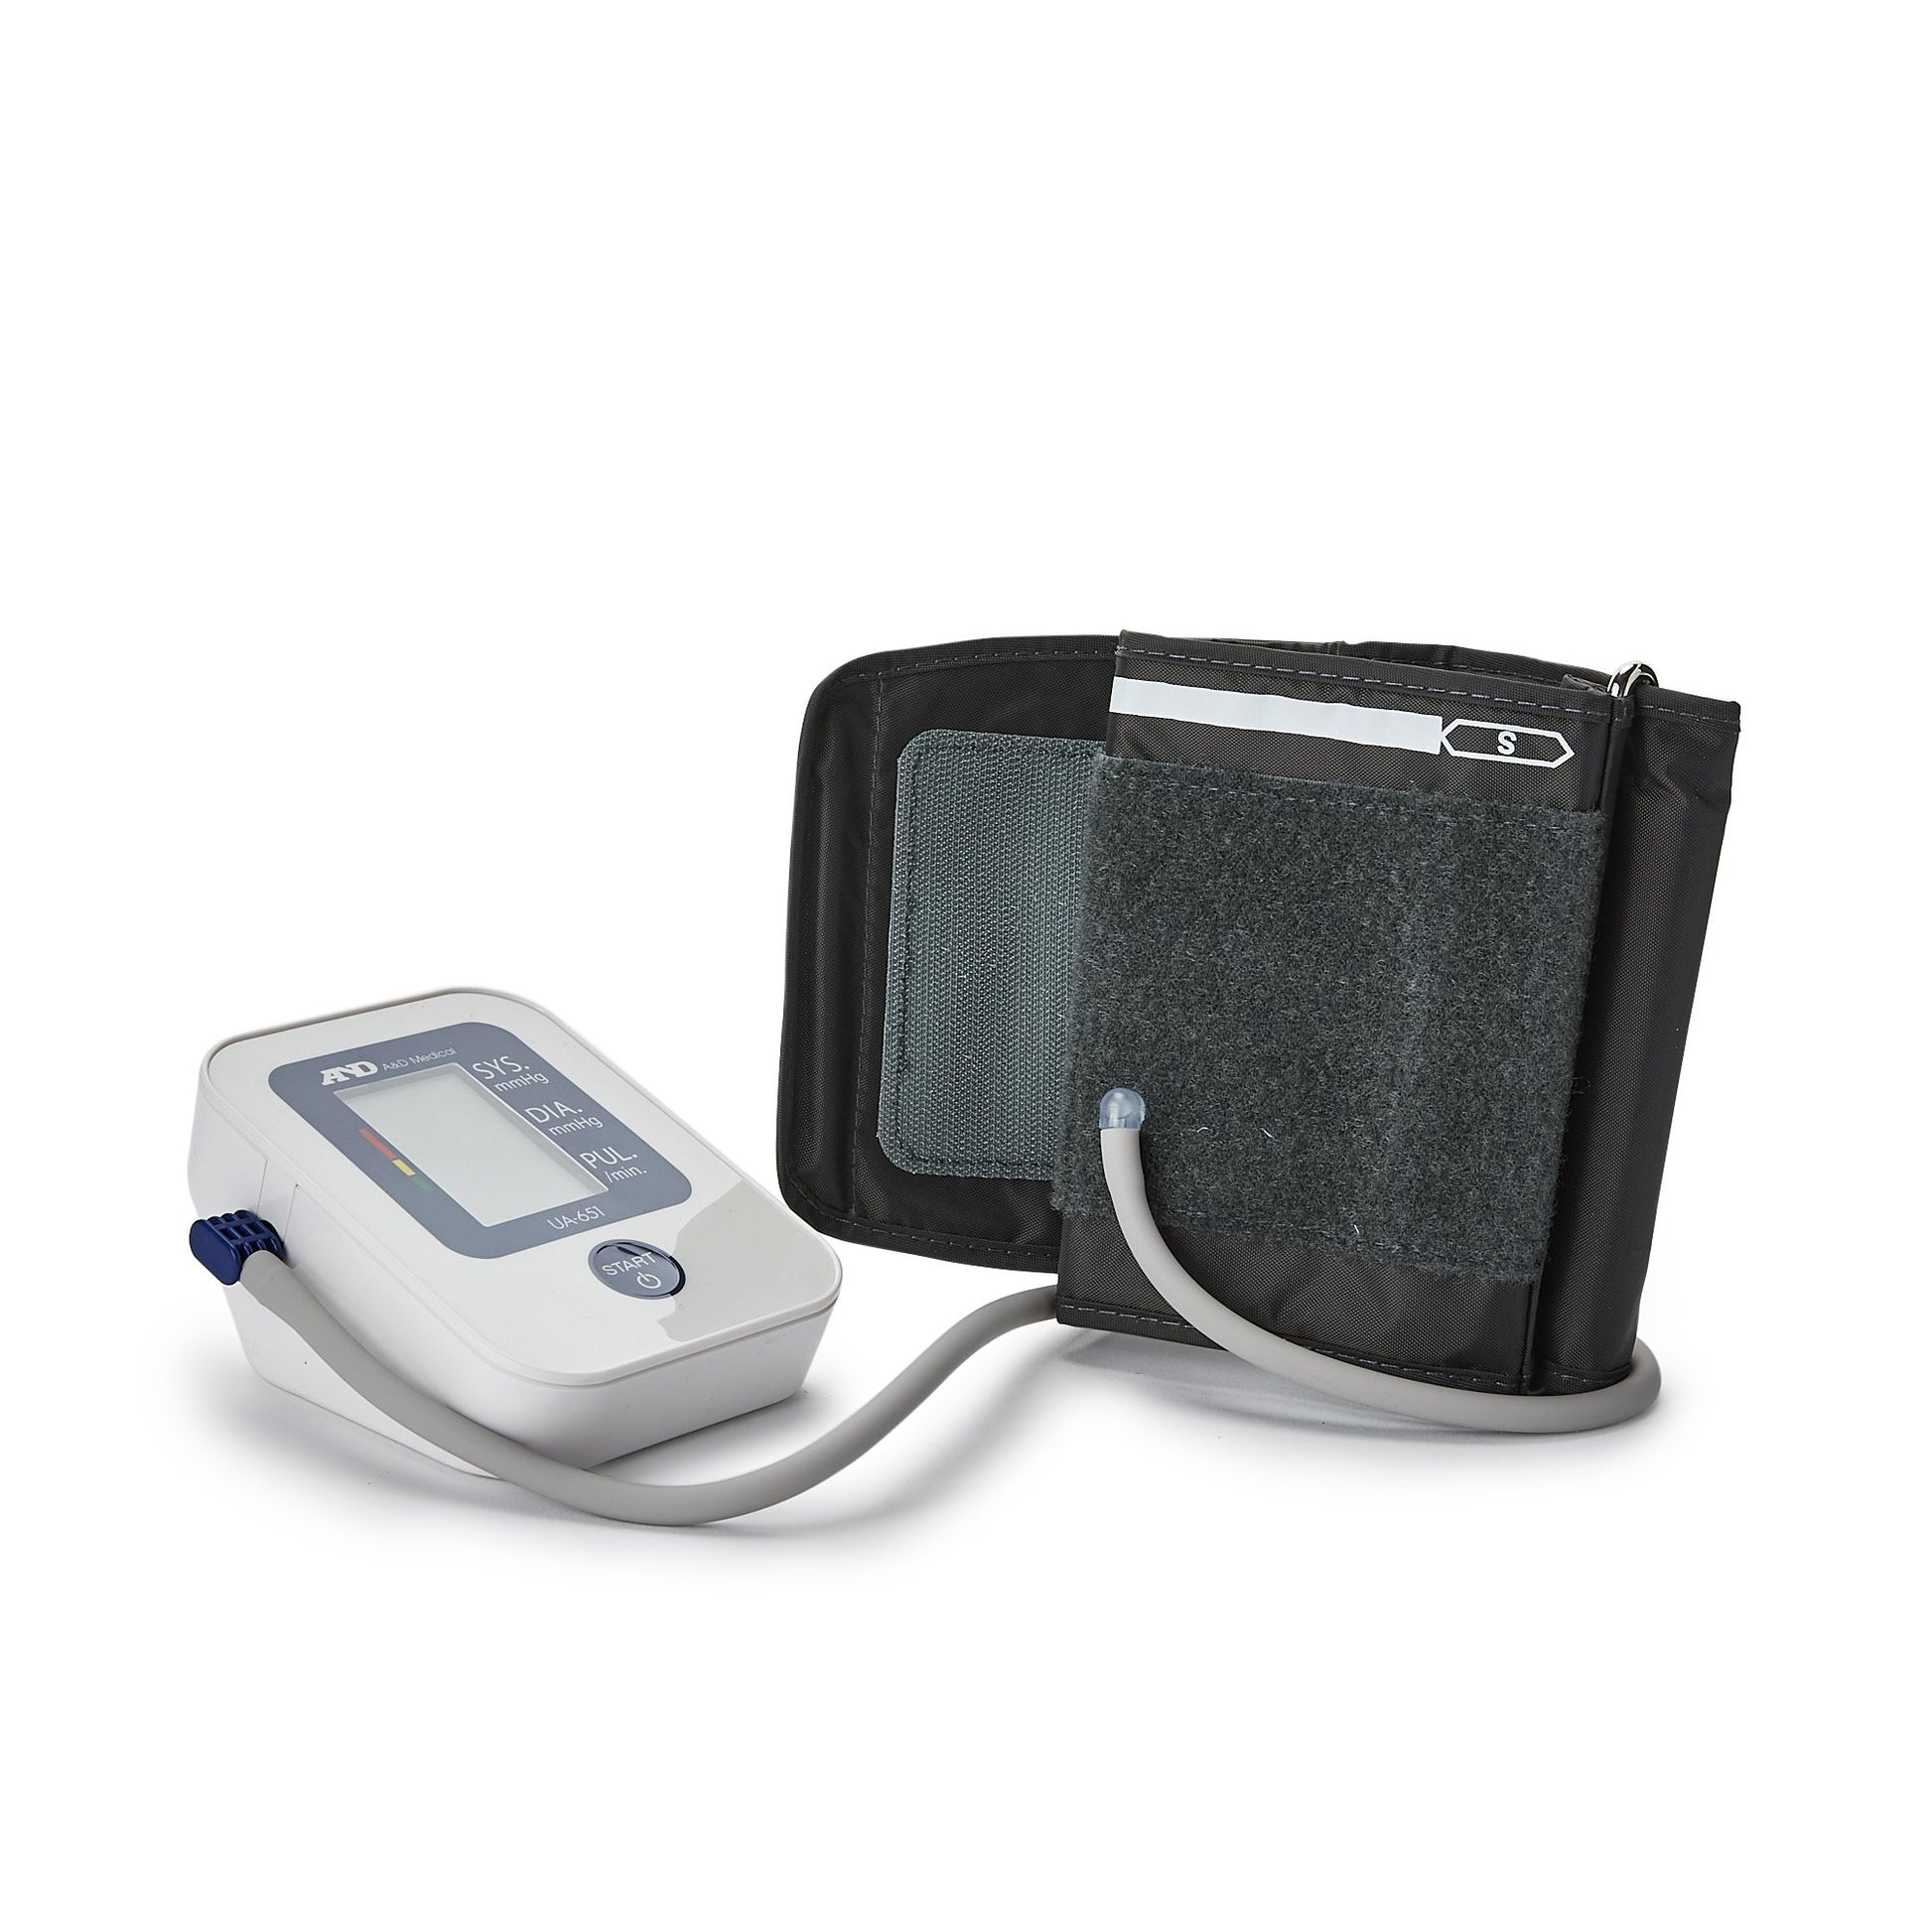 FSA Eligible Blood Pressure Monitors